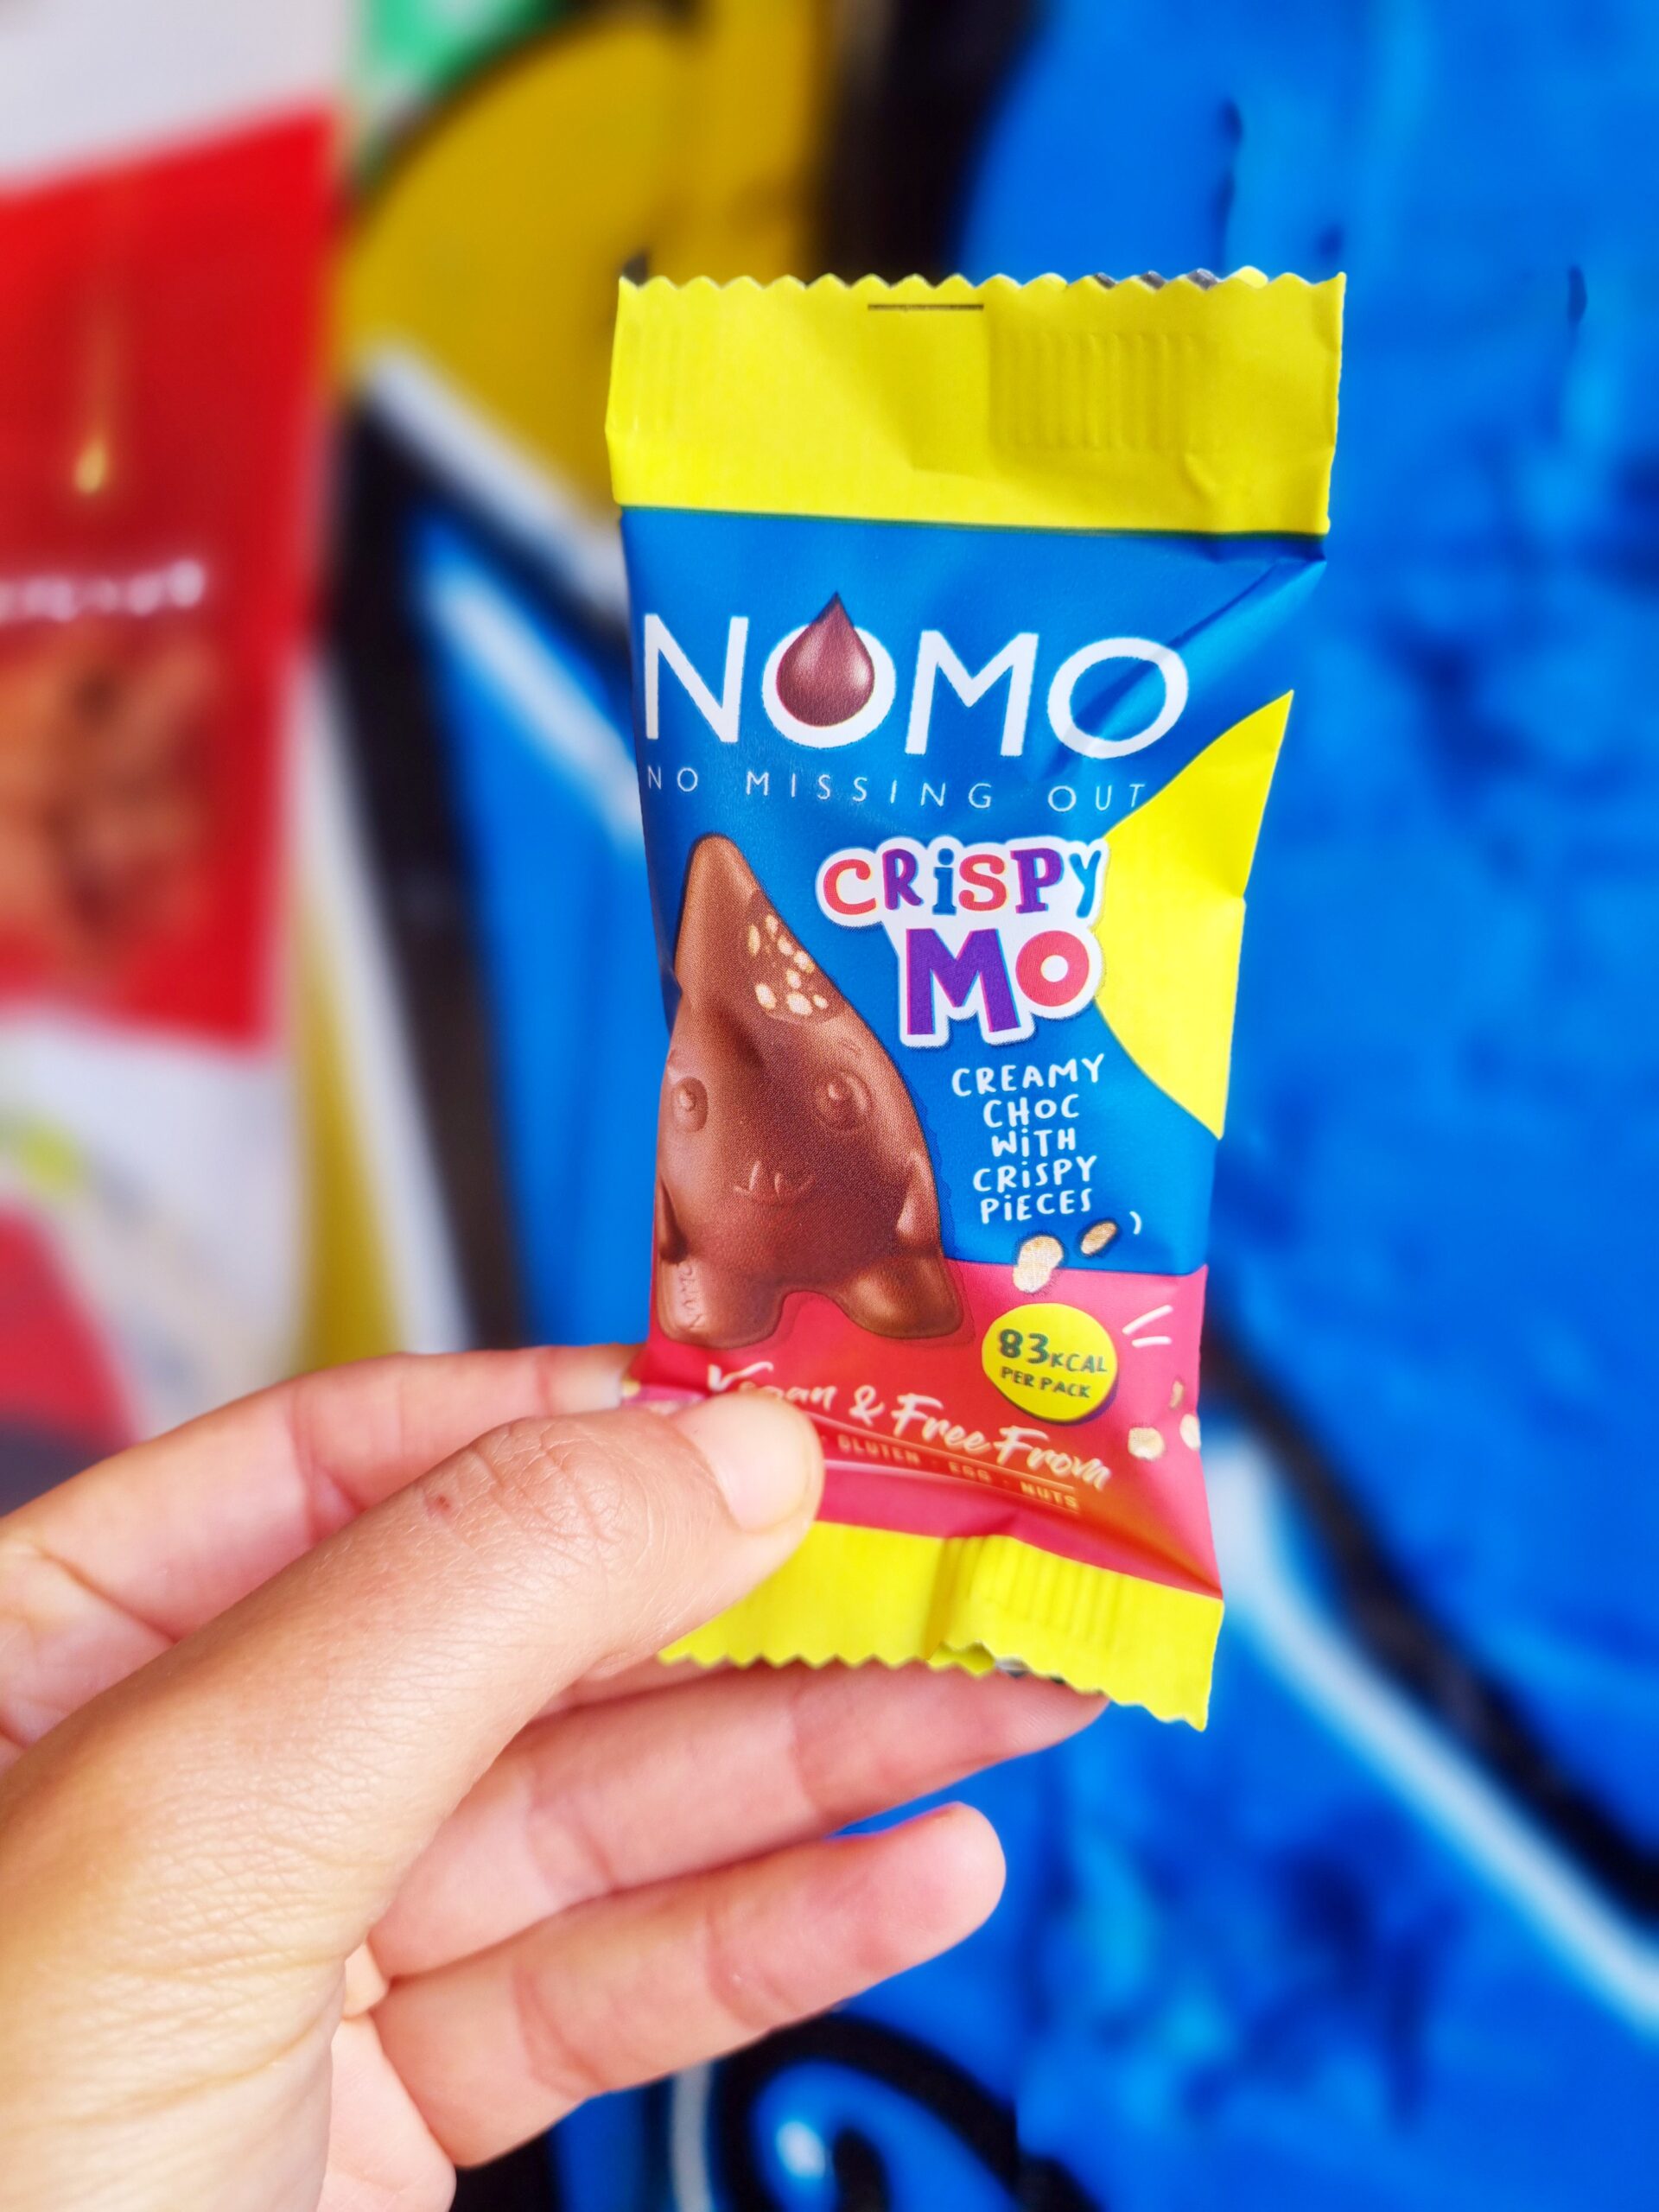 <img src="nomo.jpg" alt="nomo crispy moo chocolate"/>